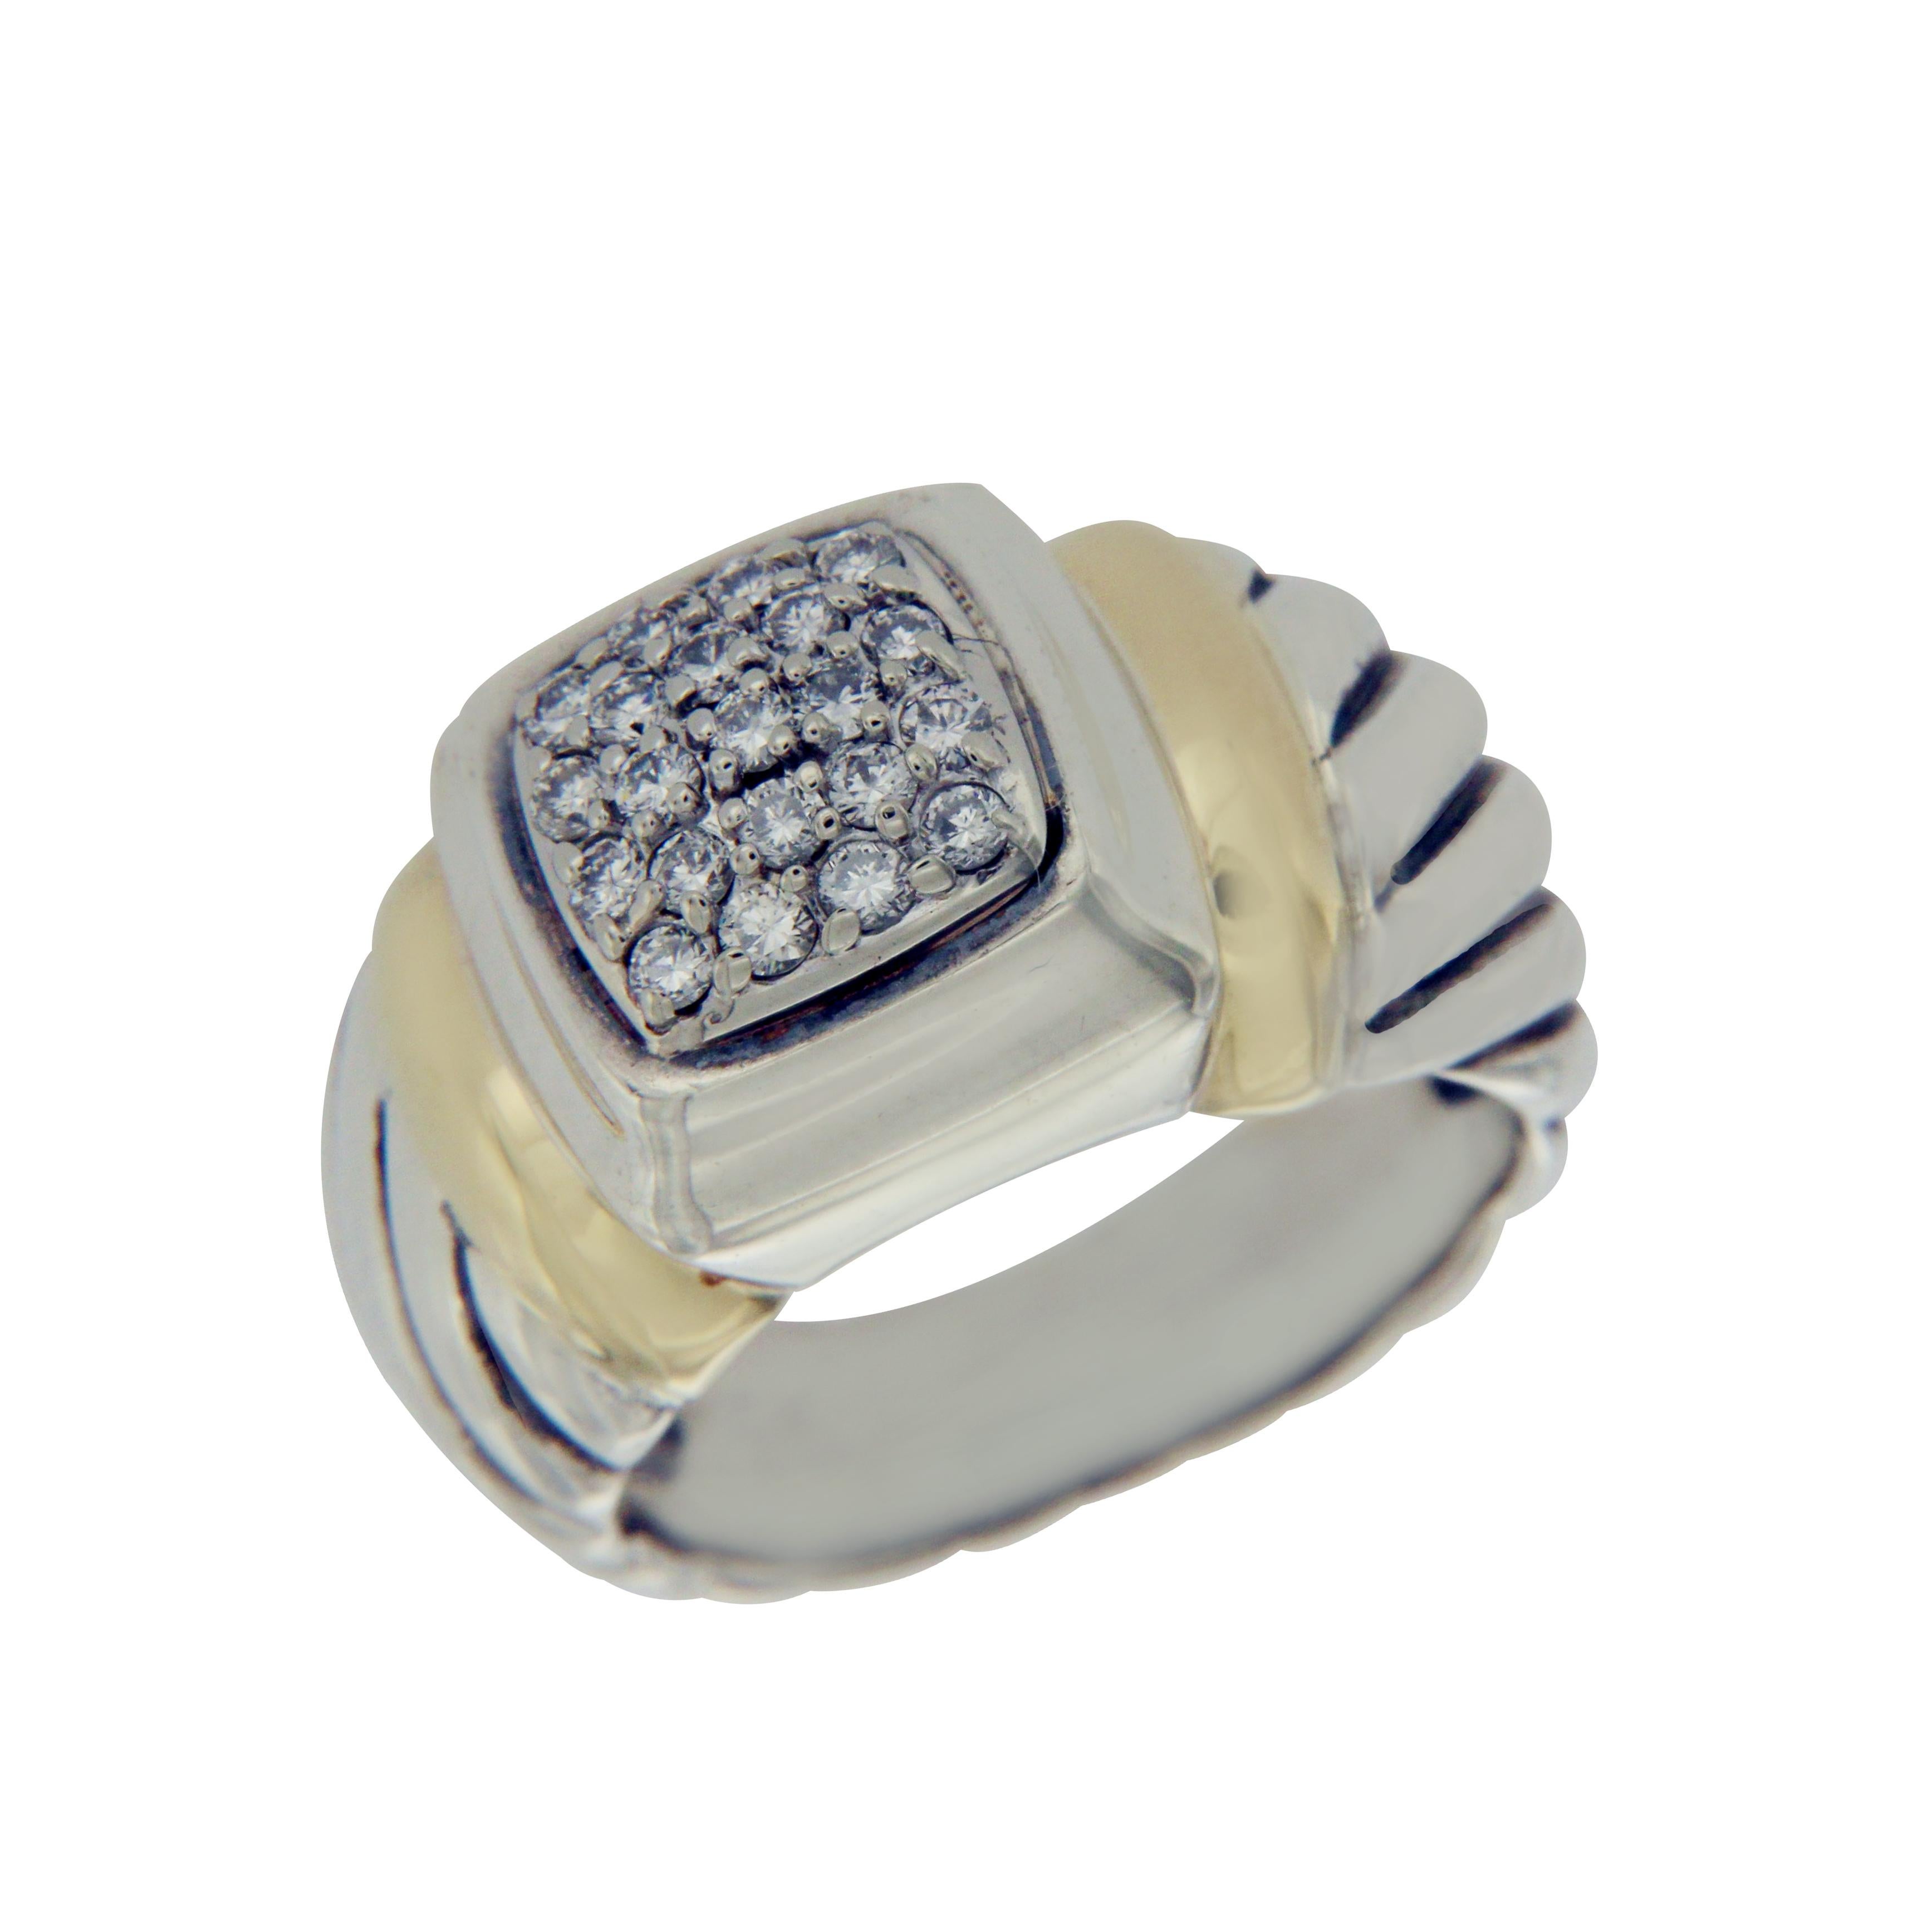 David Yurman 925 Silver and 18 Karat Gold Diamond Ring